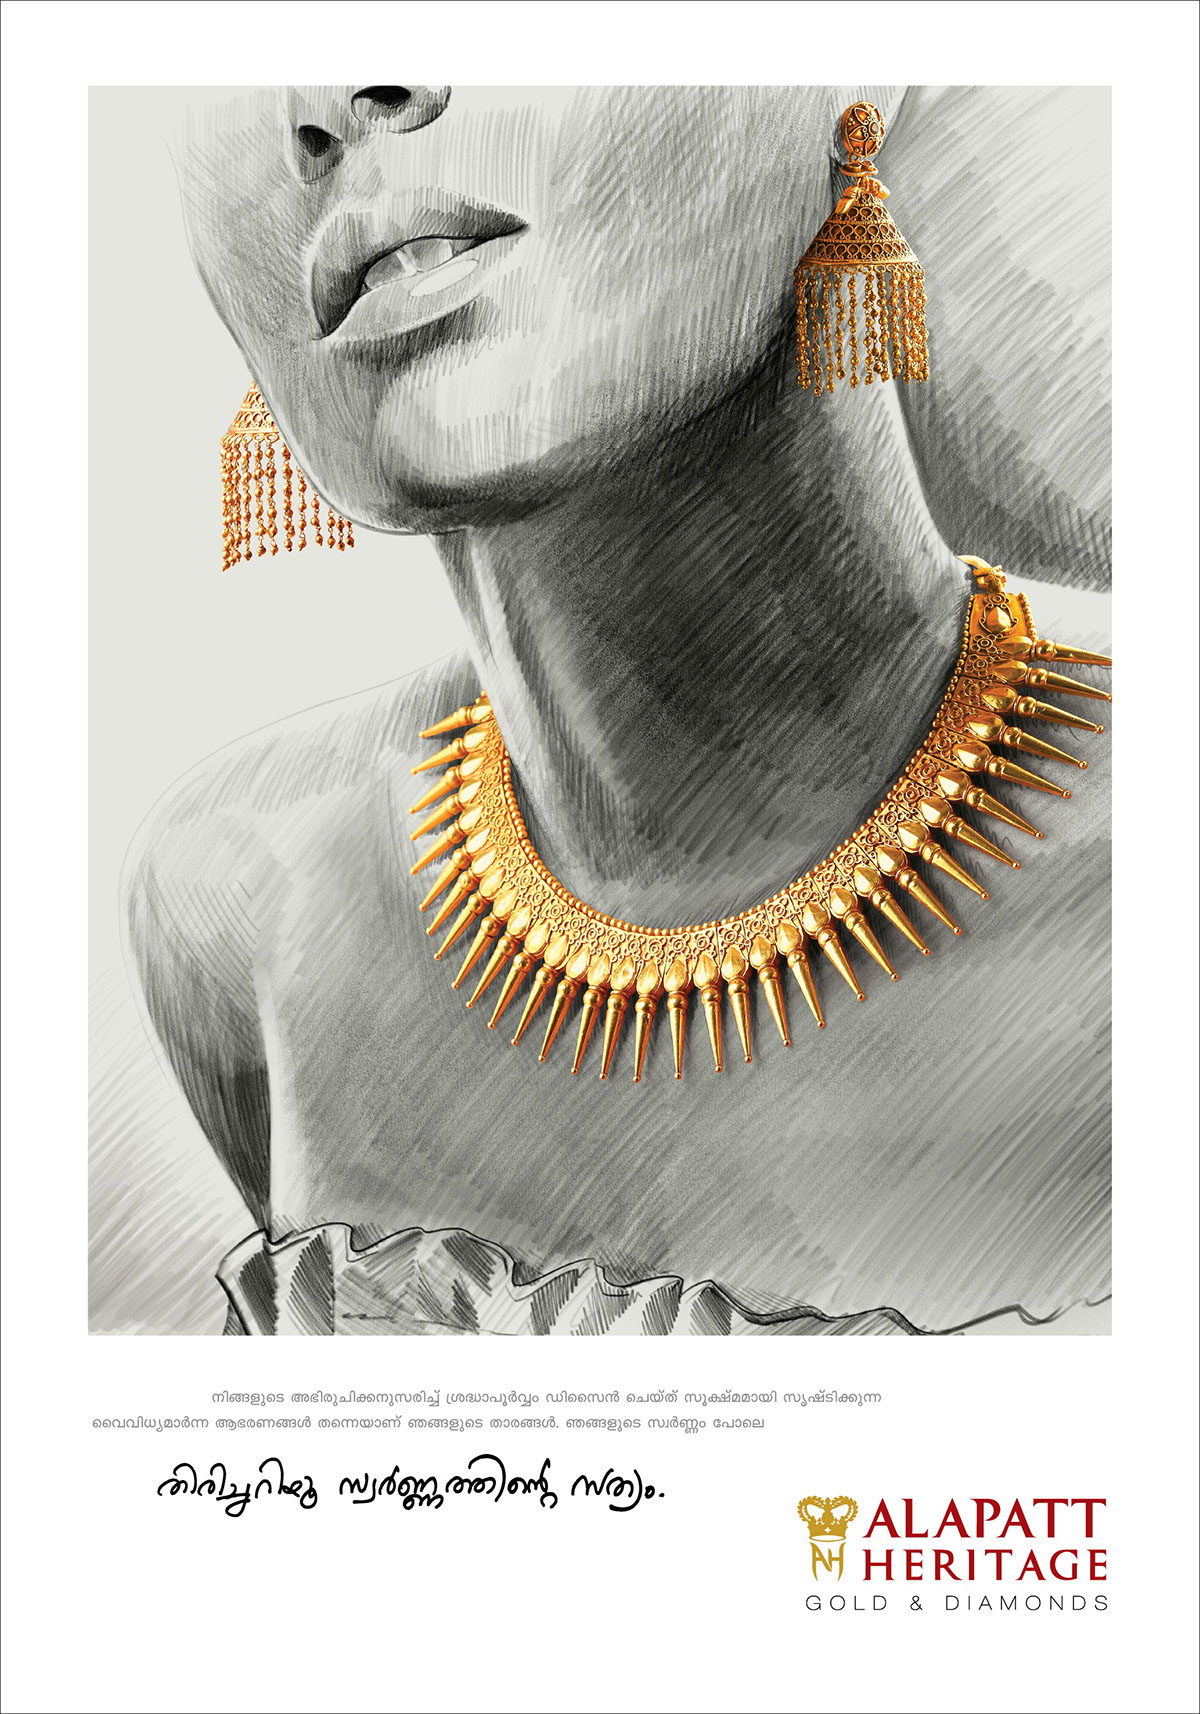 Kerala Jewellery Jewellery stark communications jaison E Antony kerala advertising